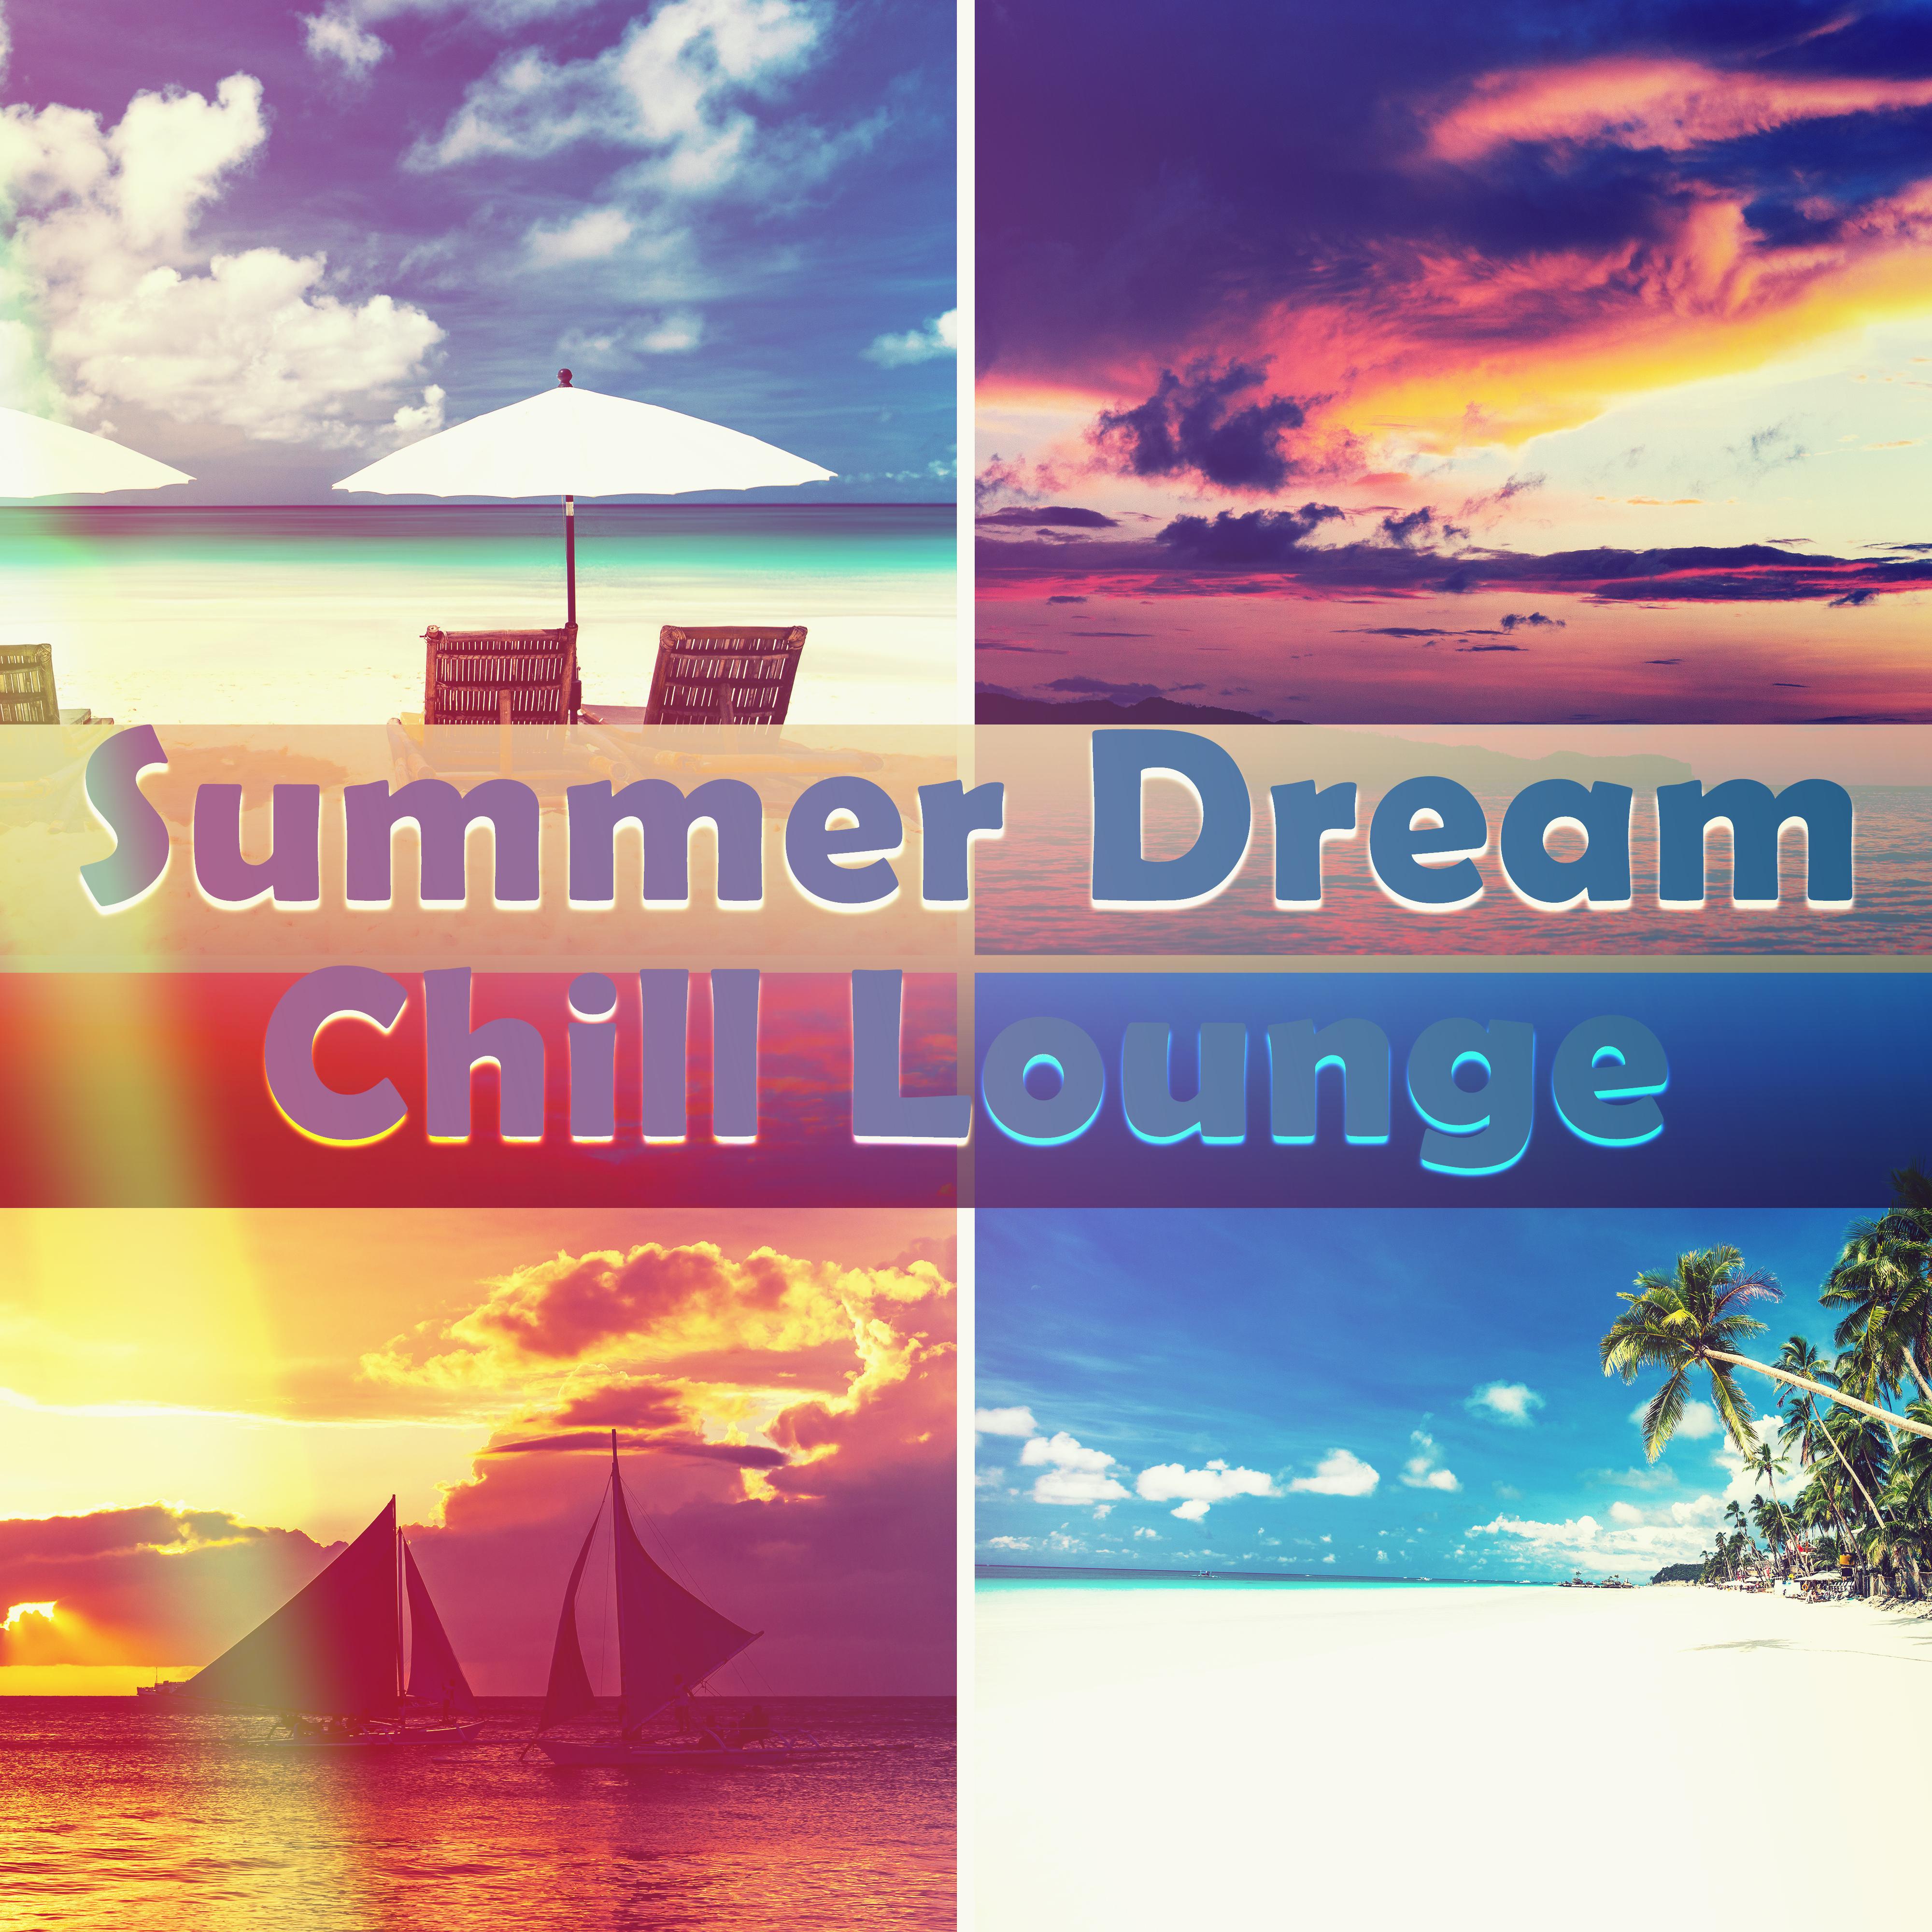 Summer Dream Chill Lounge